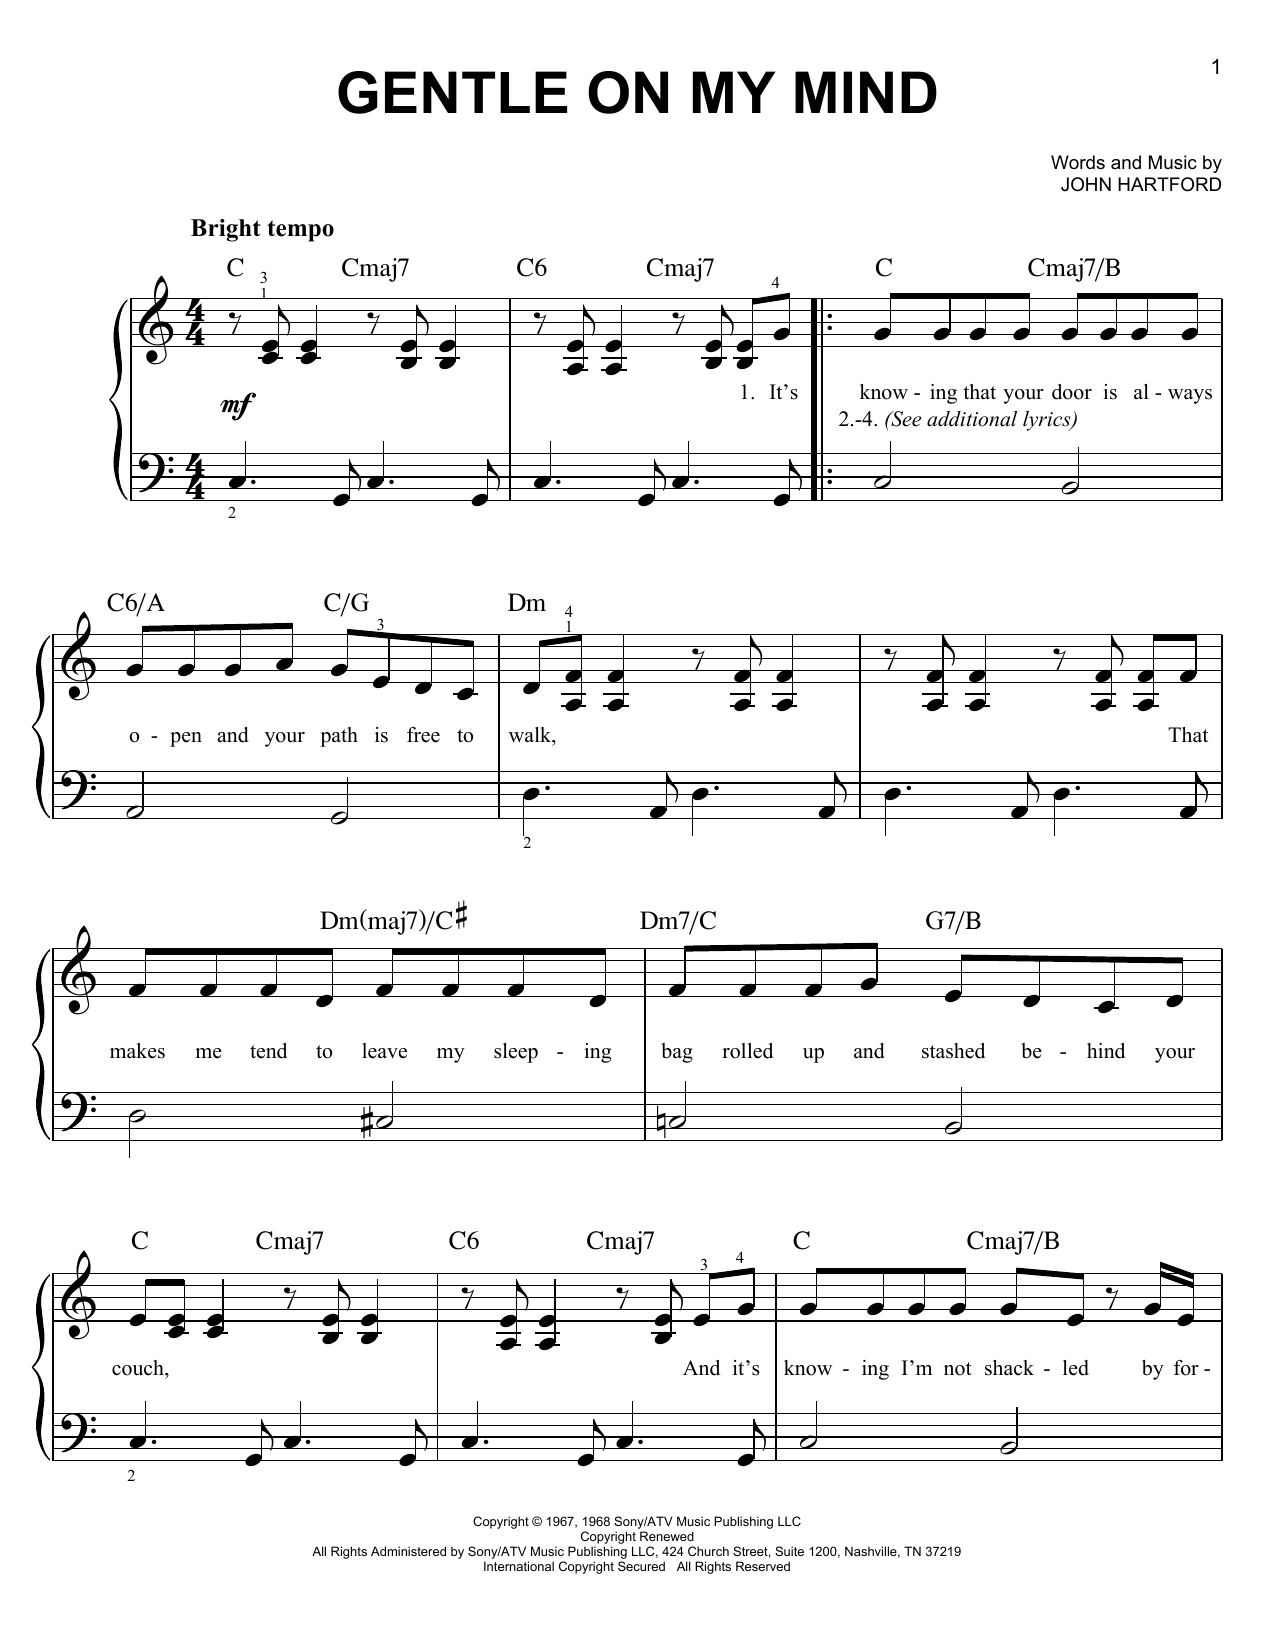 Glen Campbell Gentle On My Mind Sheet Music Notes & Chords for Viola - Download or Print PDF